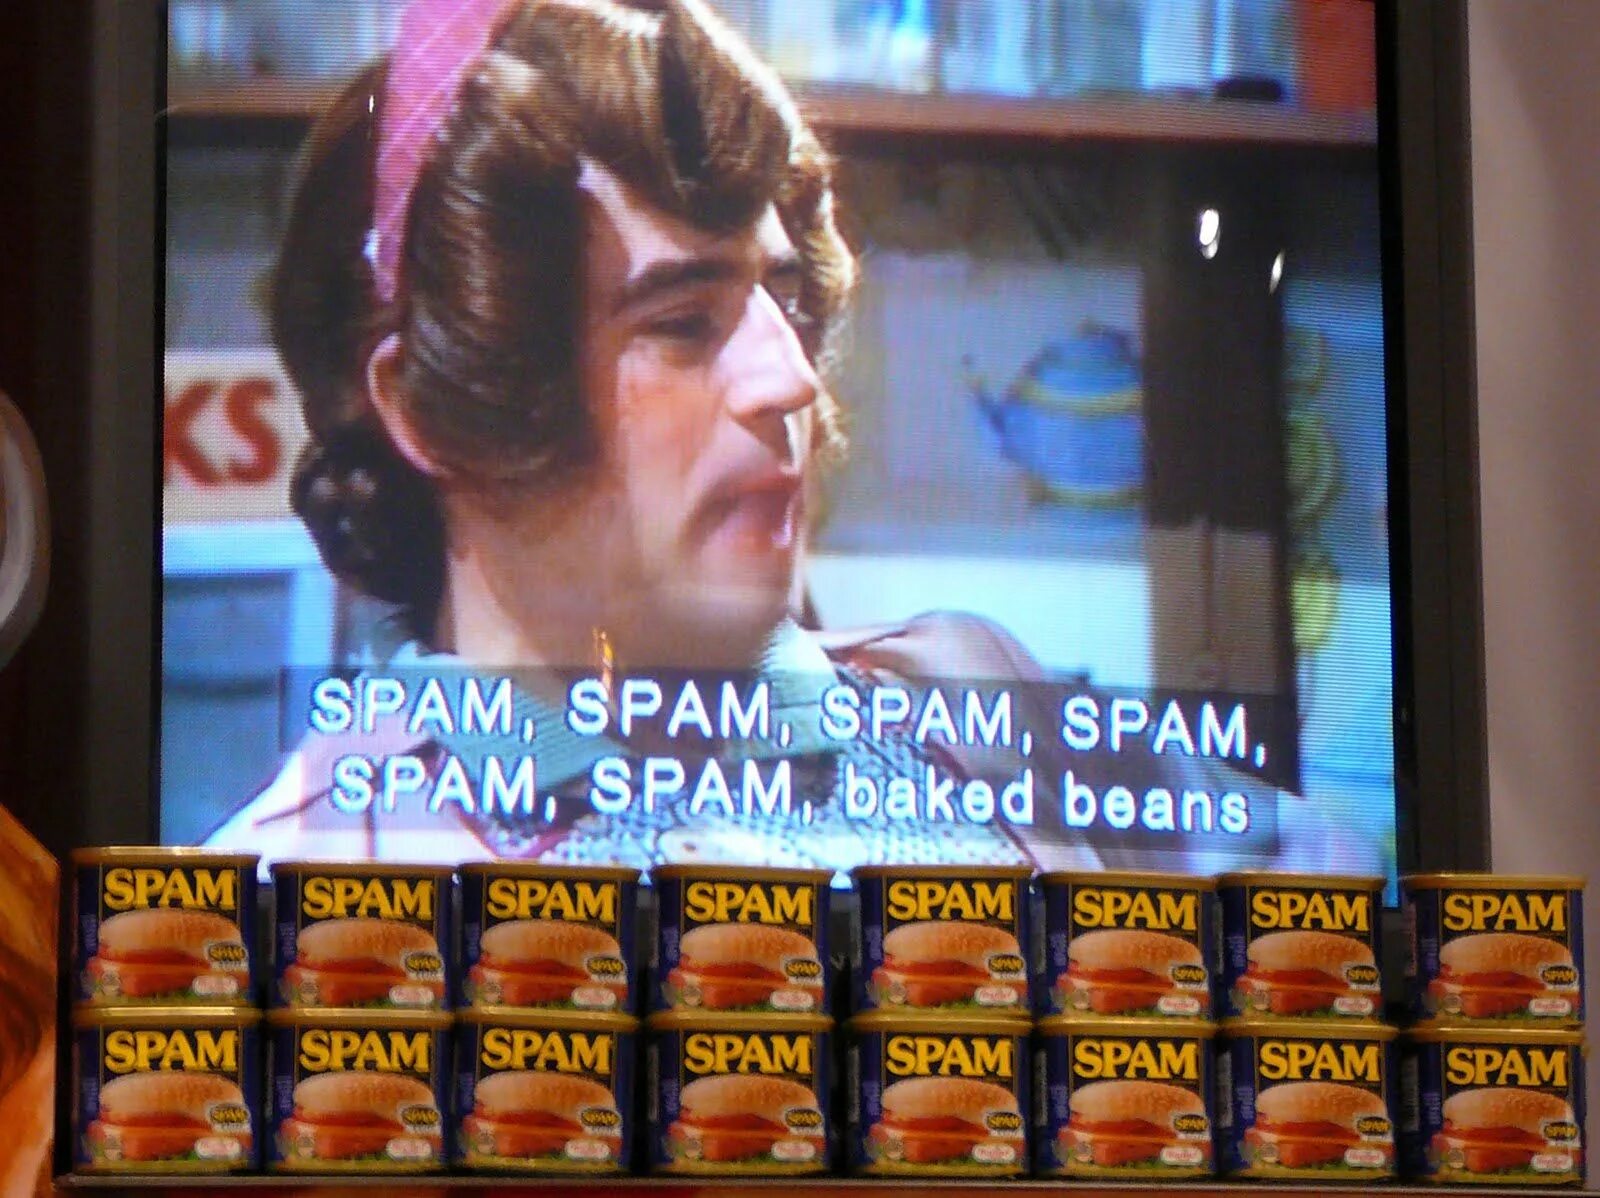 T me spammed ccs. Летающий цирк Монти Пайтона спам. Монти Пайтон спам. Реклама Spam ветчины. Spam консервы реклама.